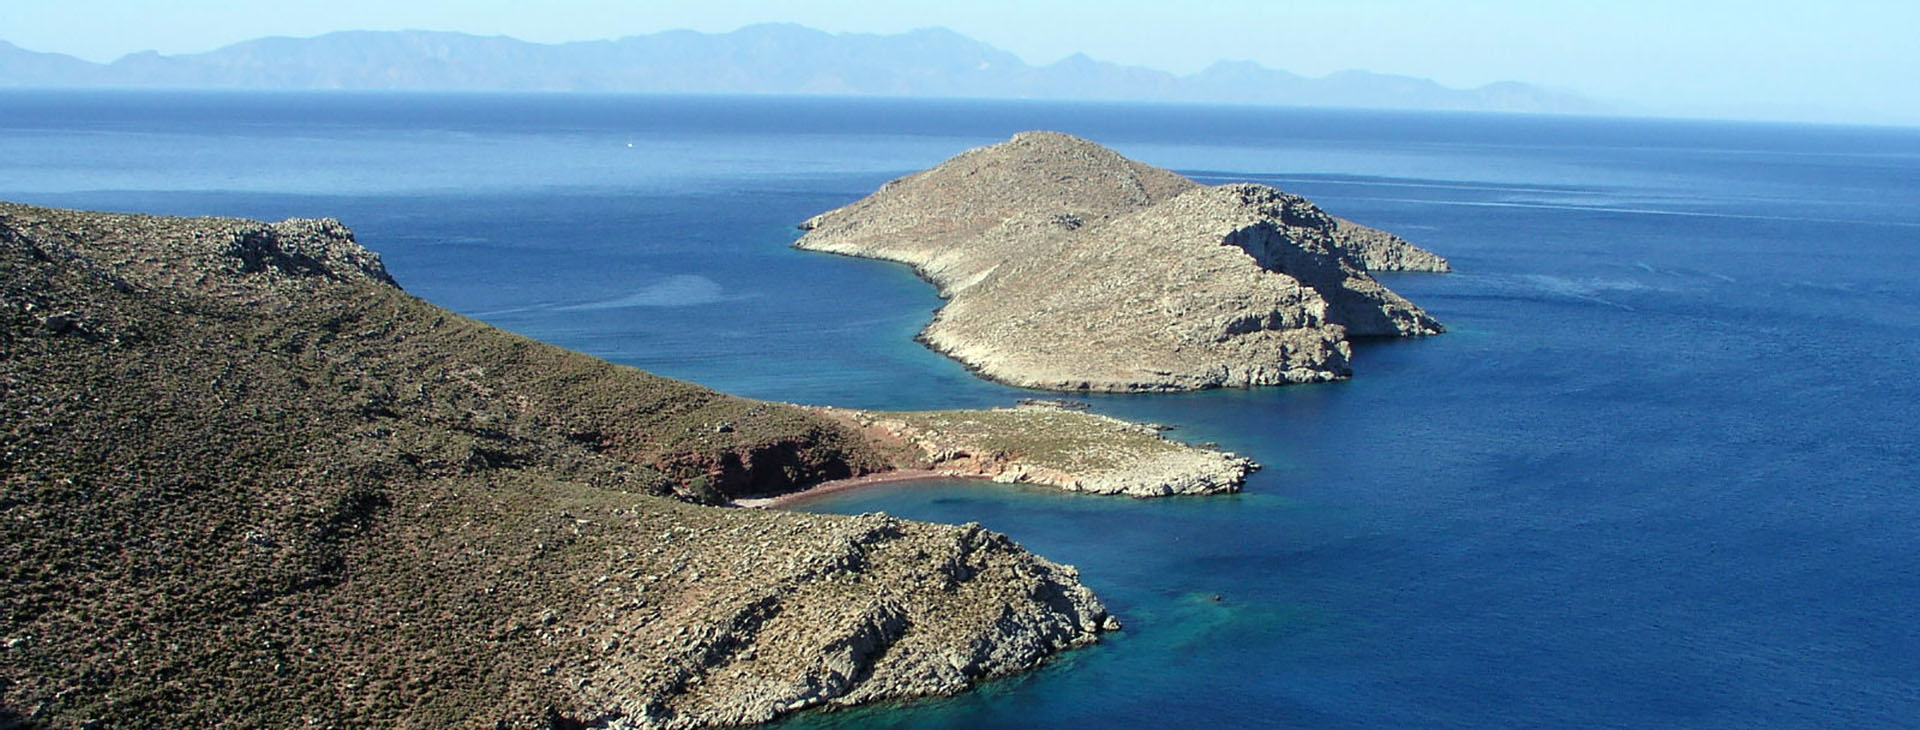 Tilos island